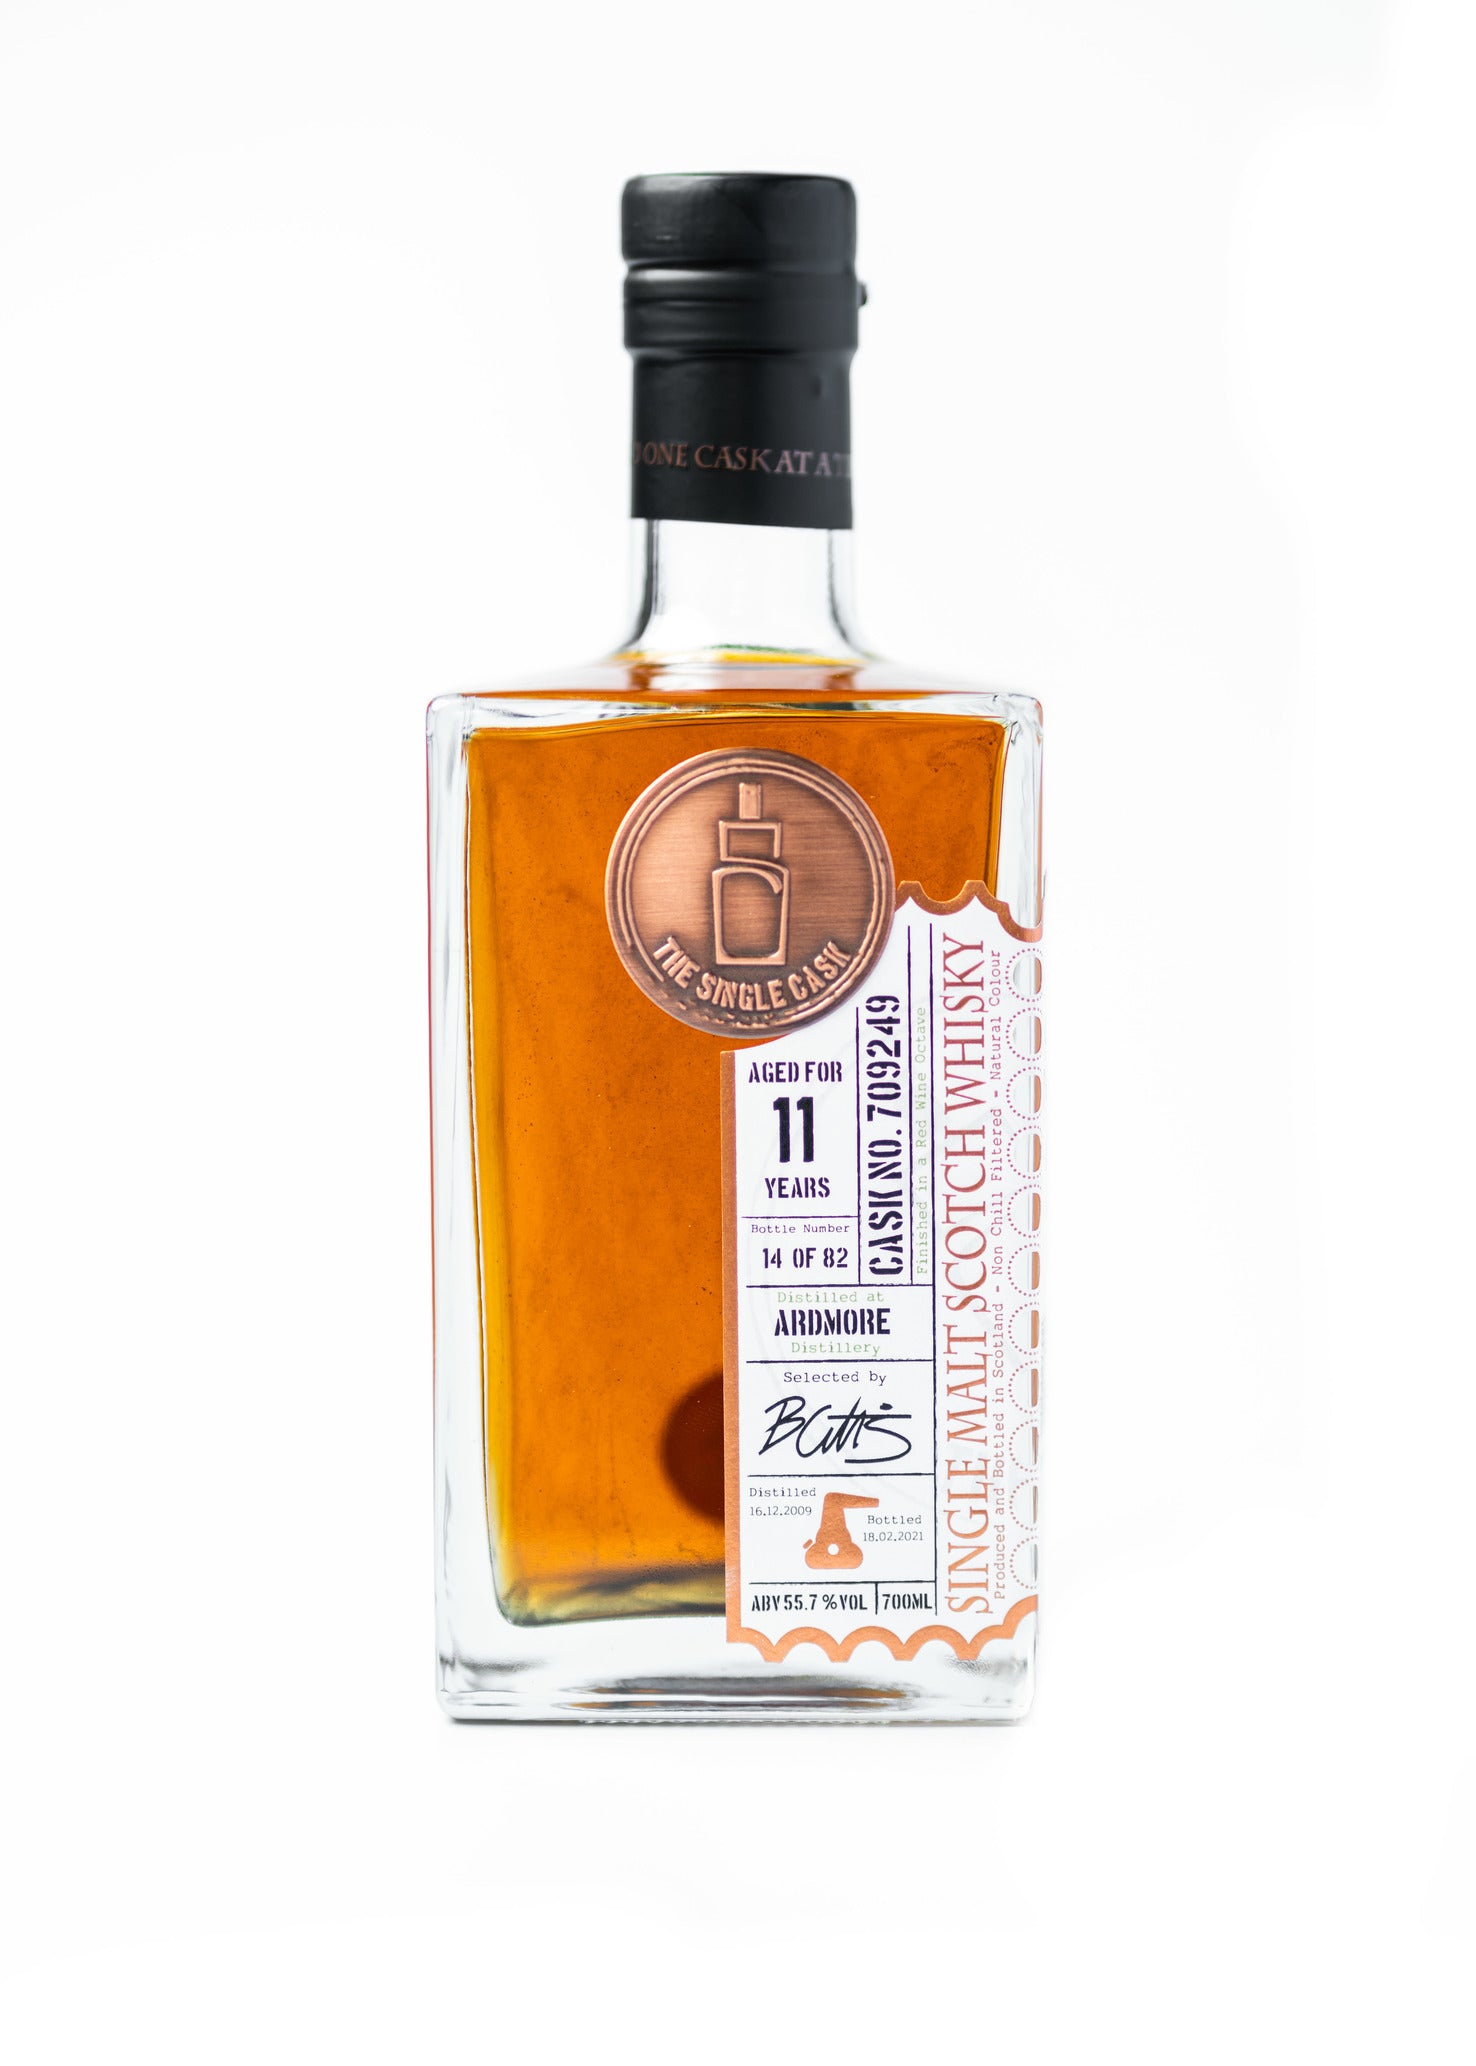 Ardmore scotch whisky bottled by The Single Cask